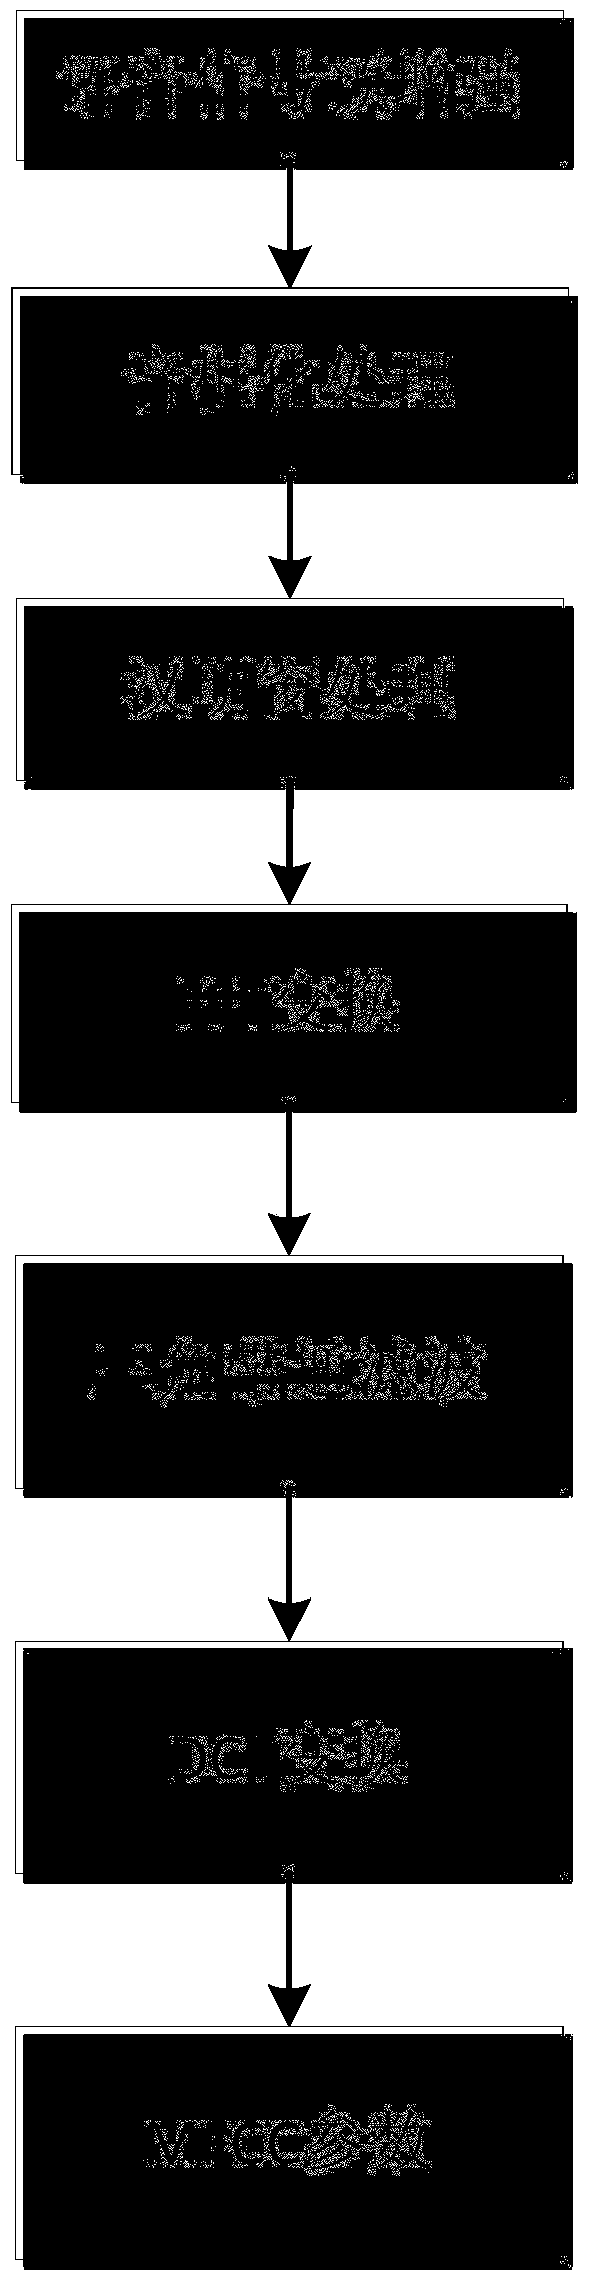 Method for generating human vocal print biometric key